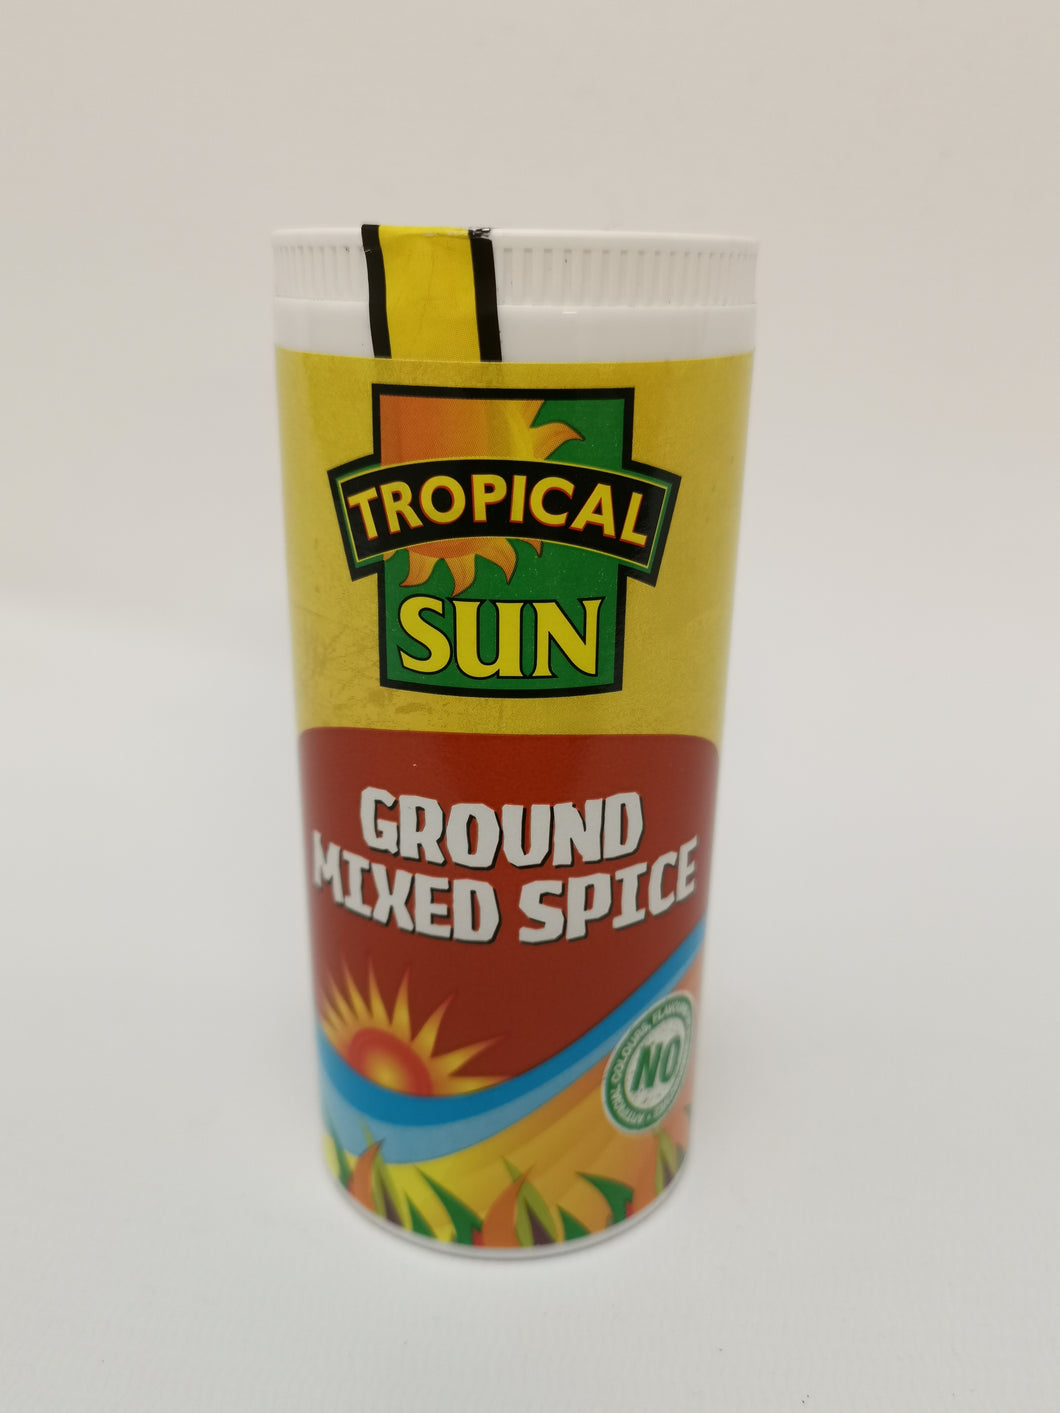 Tropical Sun Ground Mixed Spice 80g